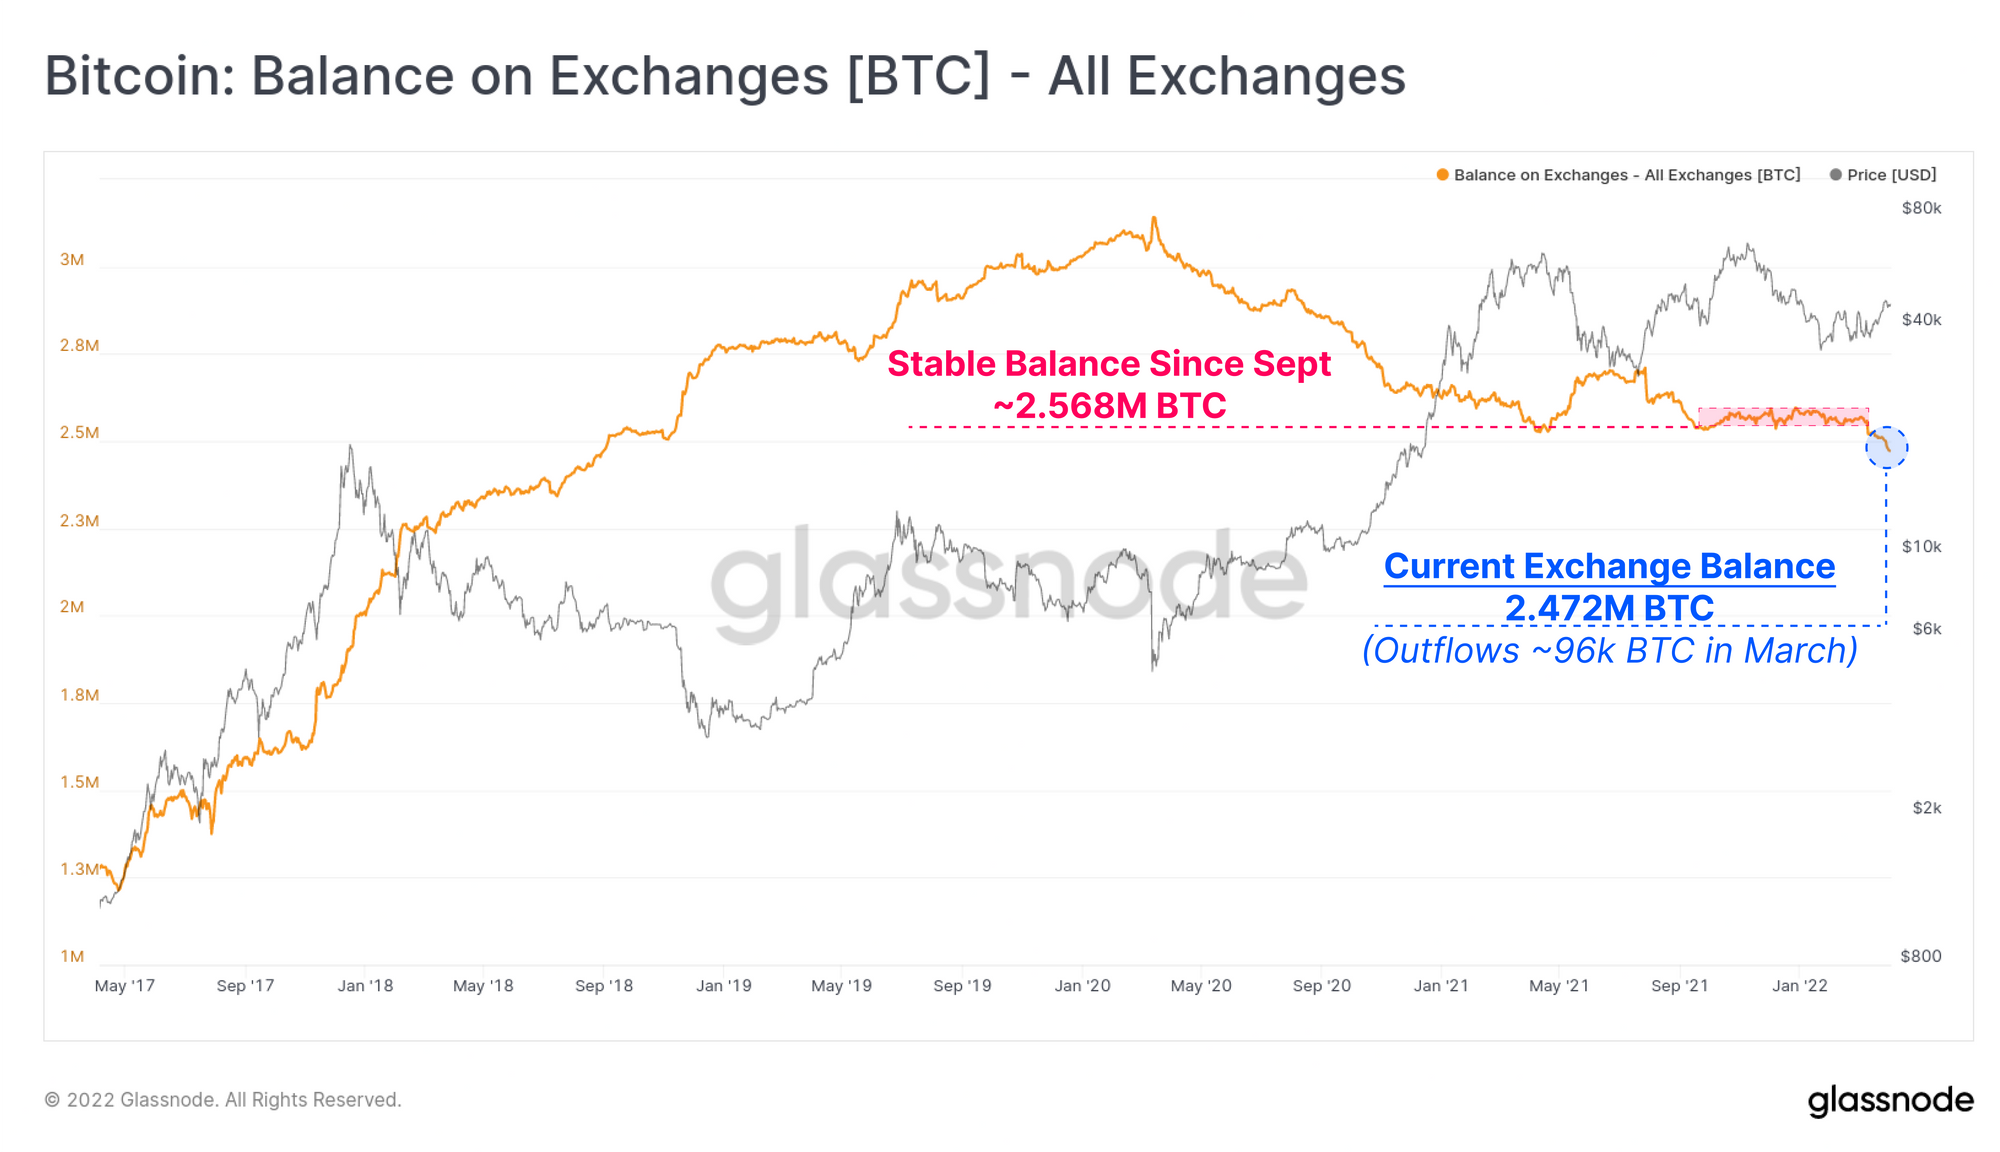 Bitcoin exchange balance on all exchanges. Source: Glassnode